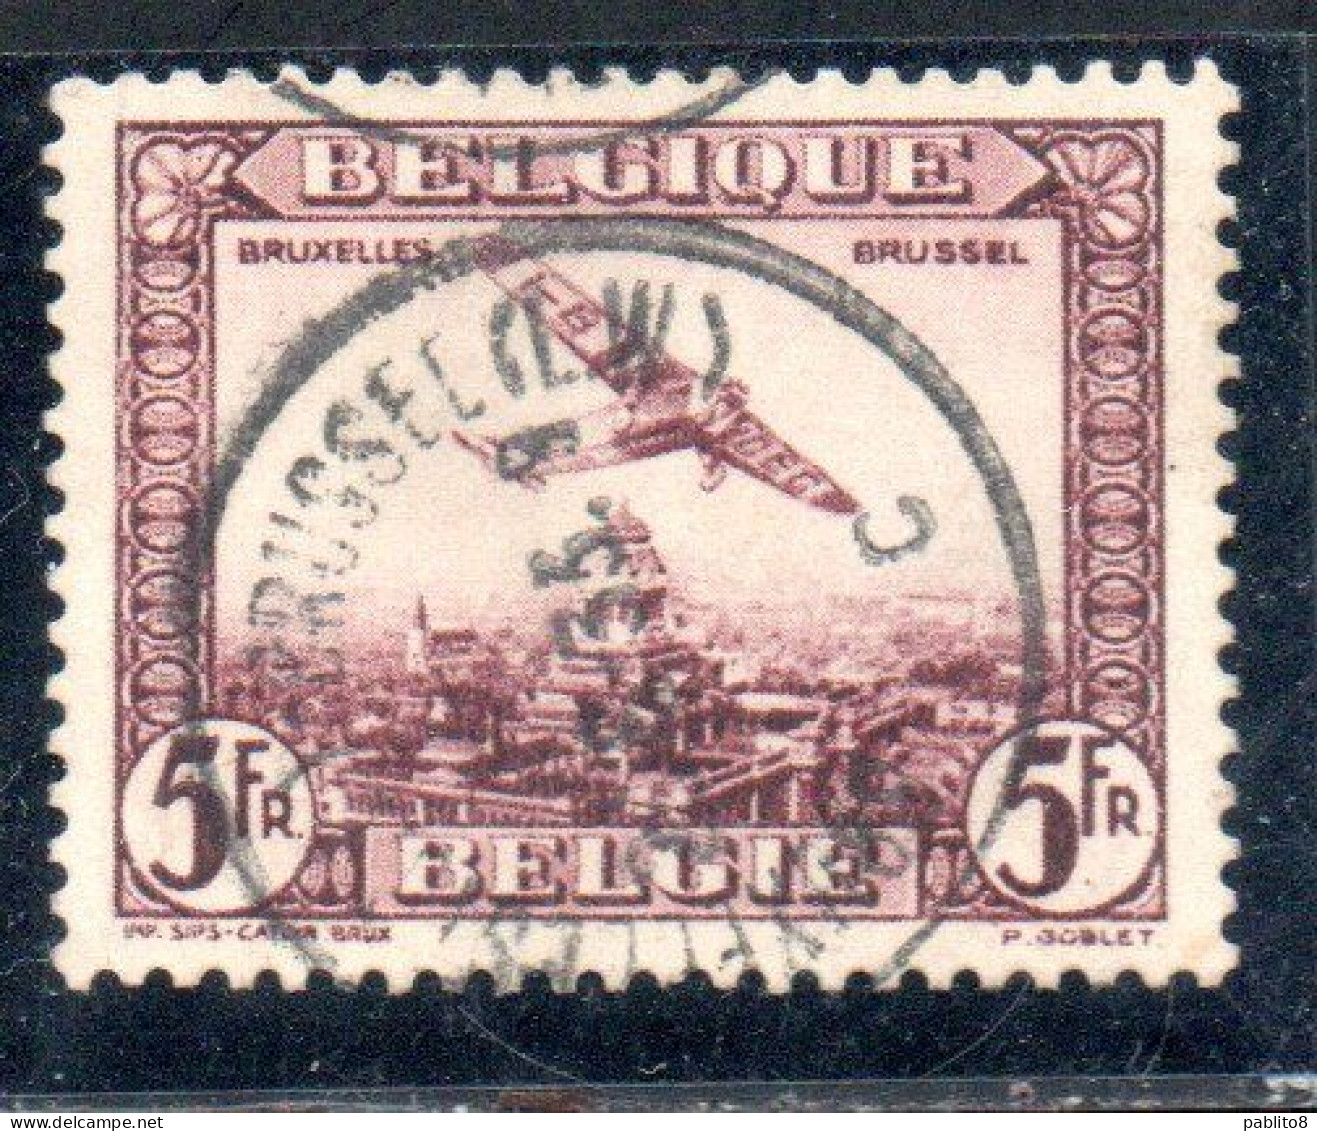 BELGIQUE BELGIE BELGIO BELGIUM 1930 AIR POST MAIL STAMP AIRMAIL FOKKER FVII/3m OVER BRUSSELS 5fr USED OBLITERE' USATO - Usati